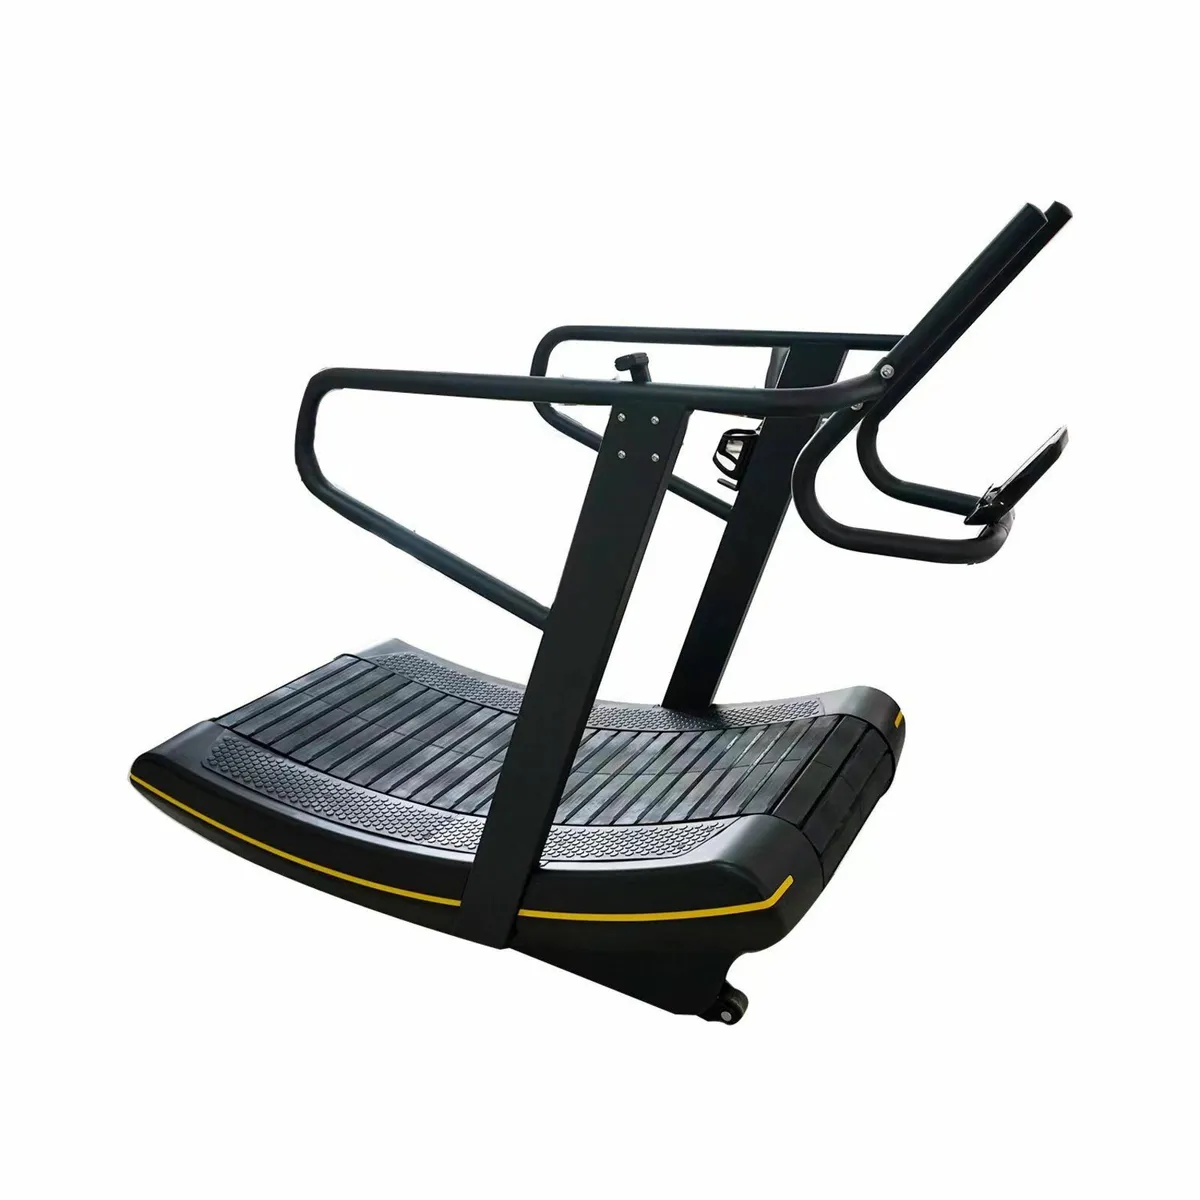 Non motorized Curved Treadmill